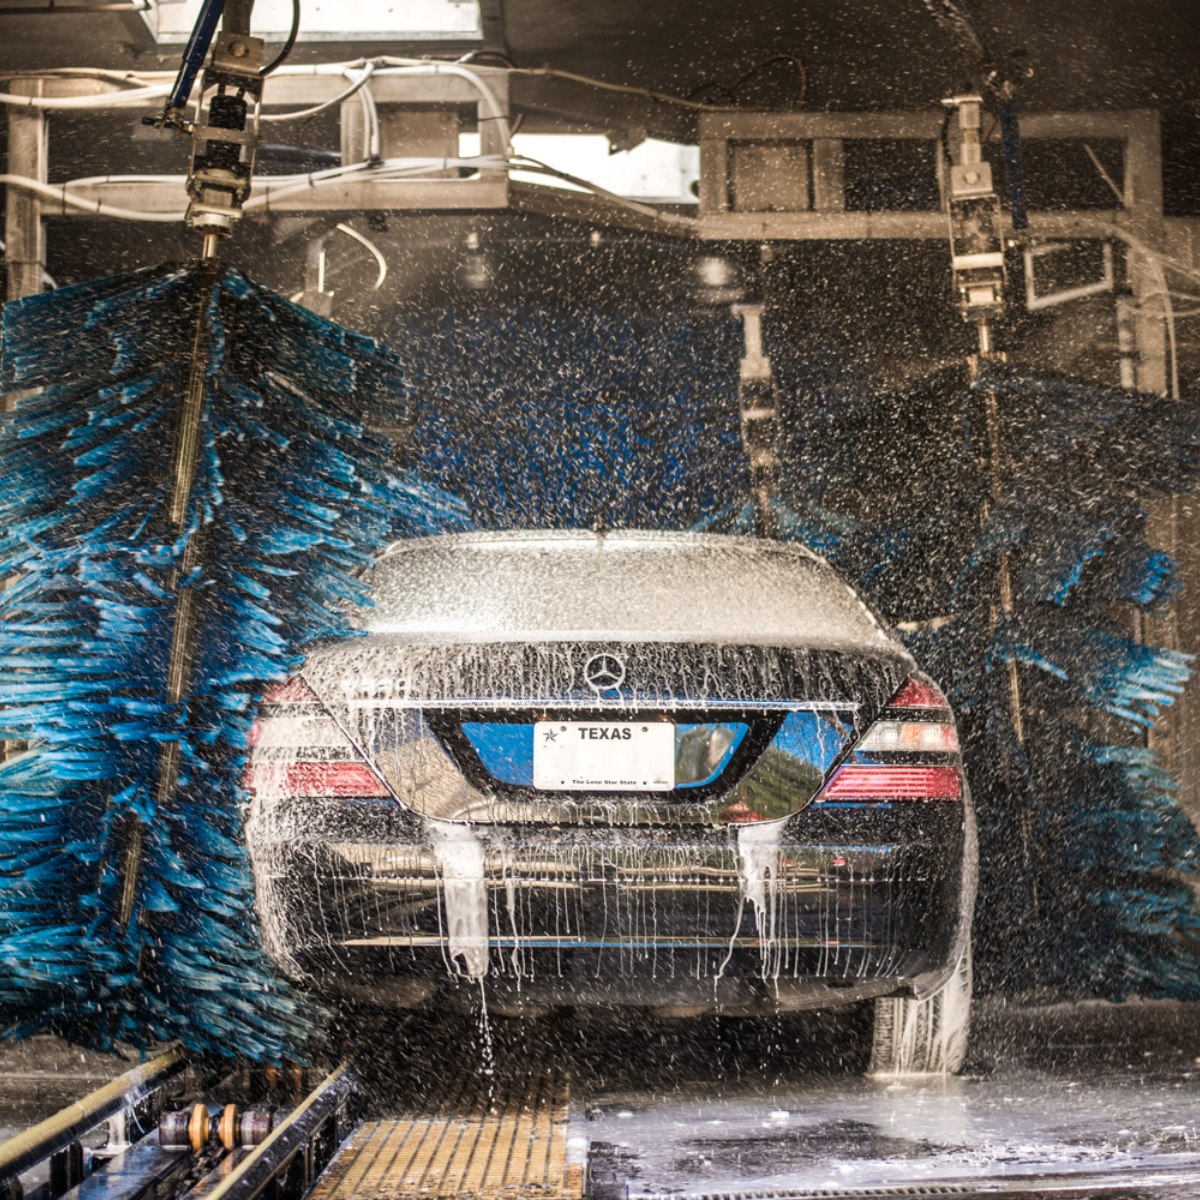 Car Wash In The Usa